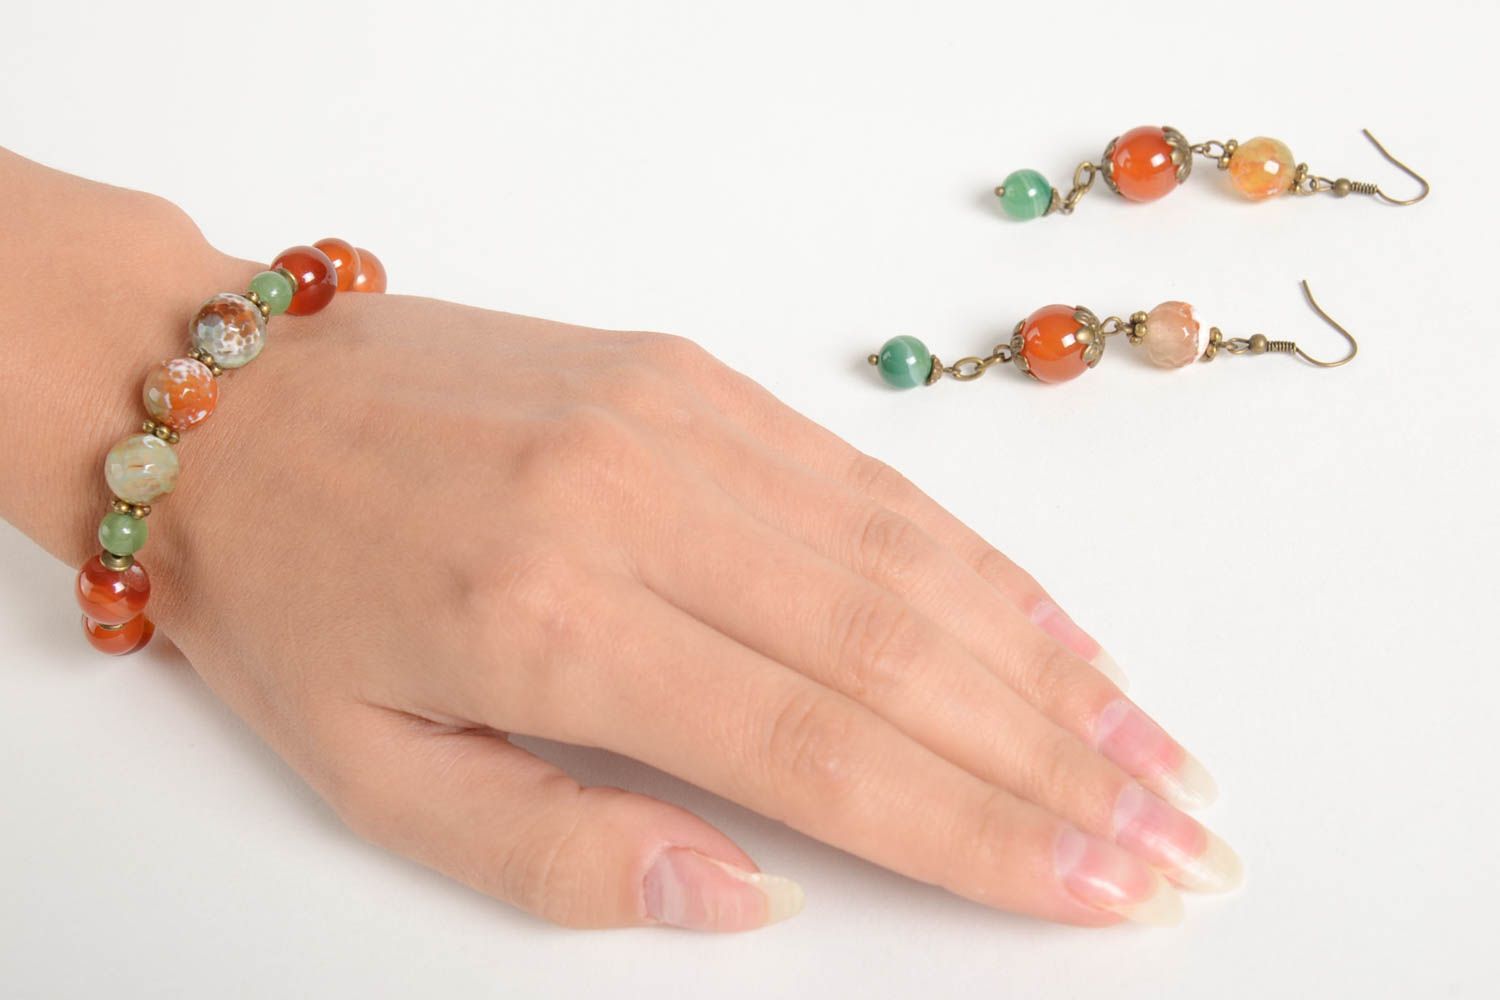 Handmade natural stone jewelry designer stylish earrings elegant wrist bracelet photo 2